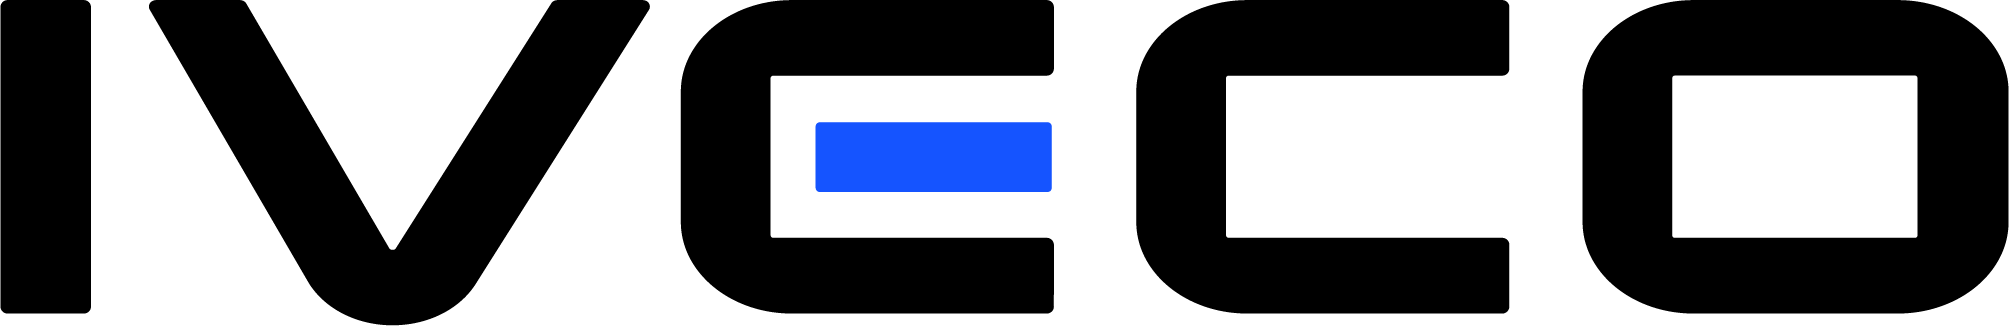 IVECO_Logo_RGB_web.png